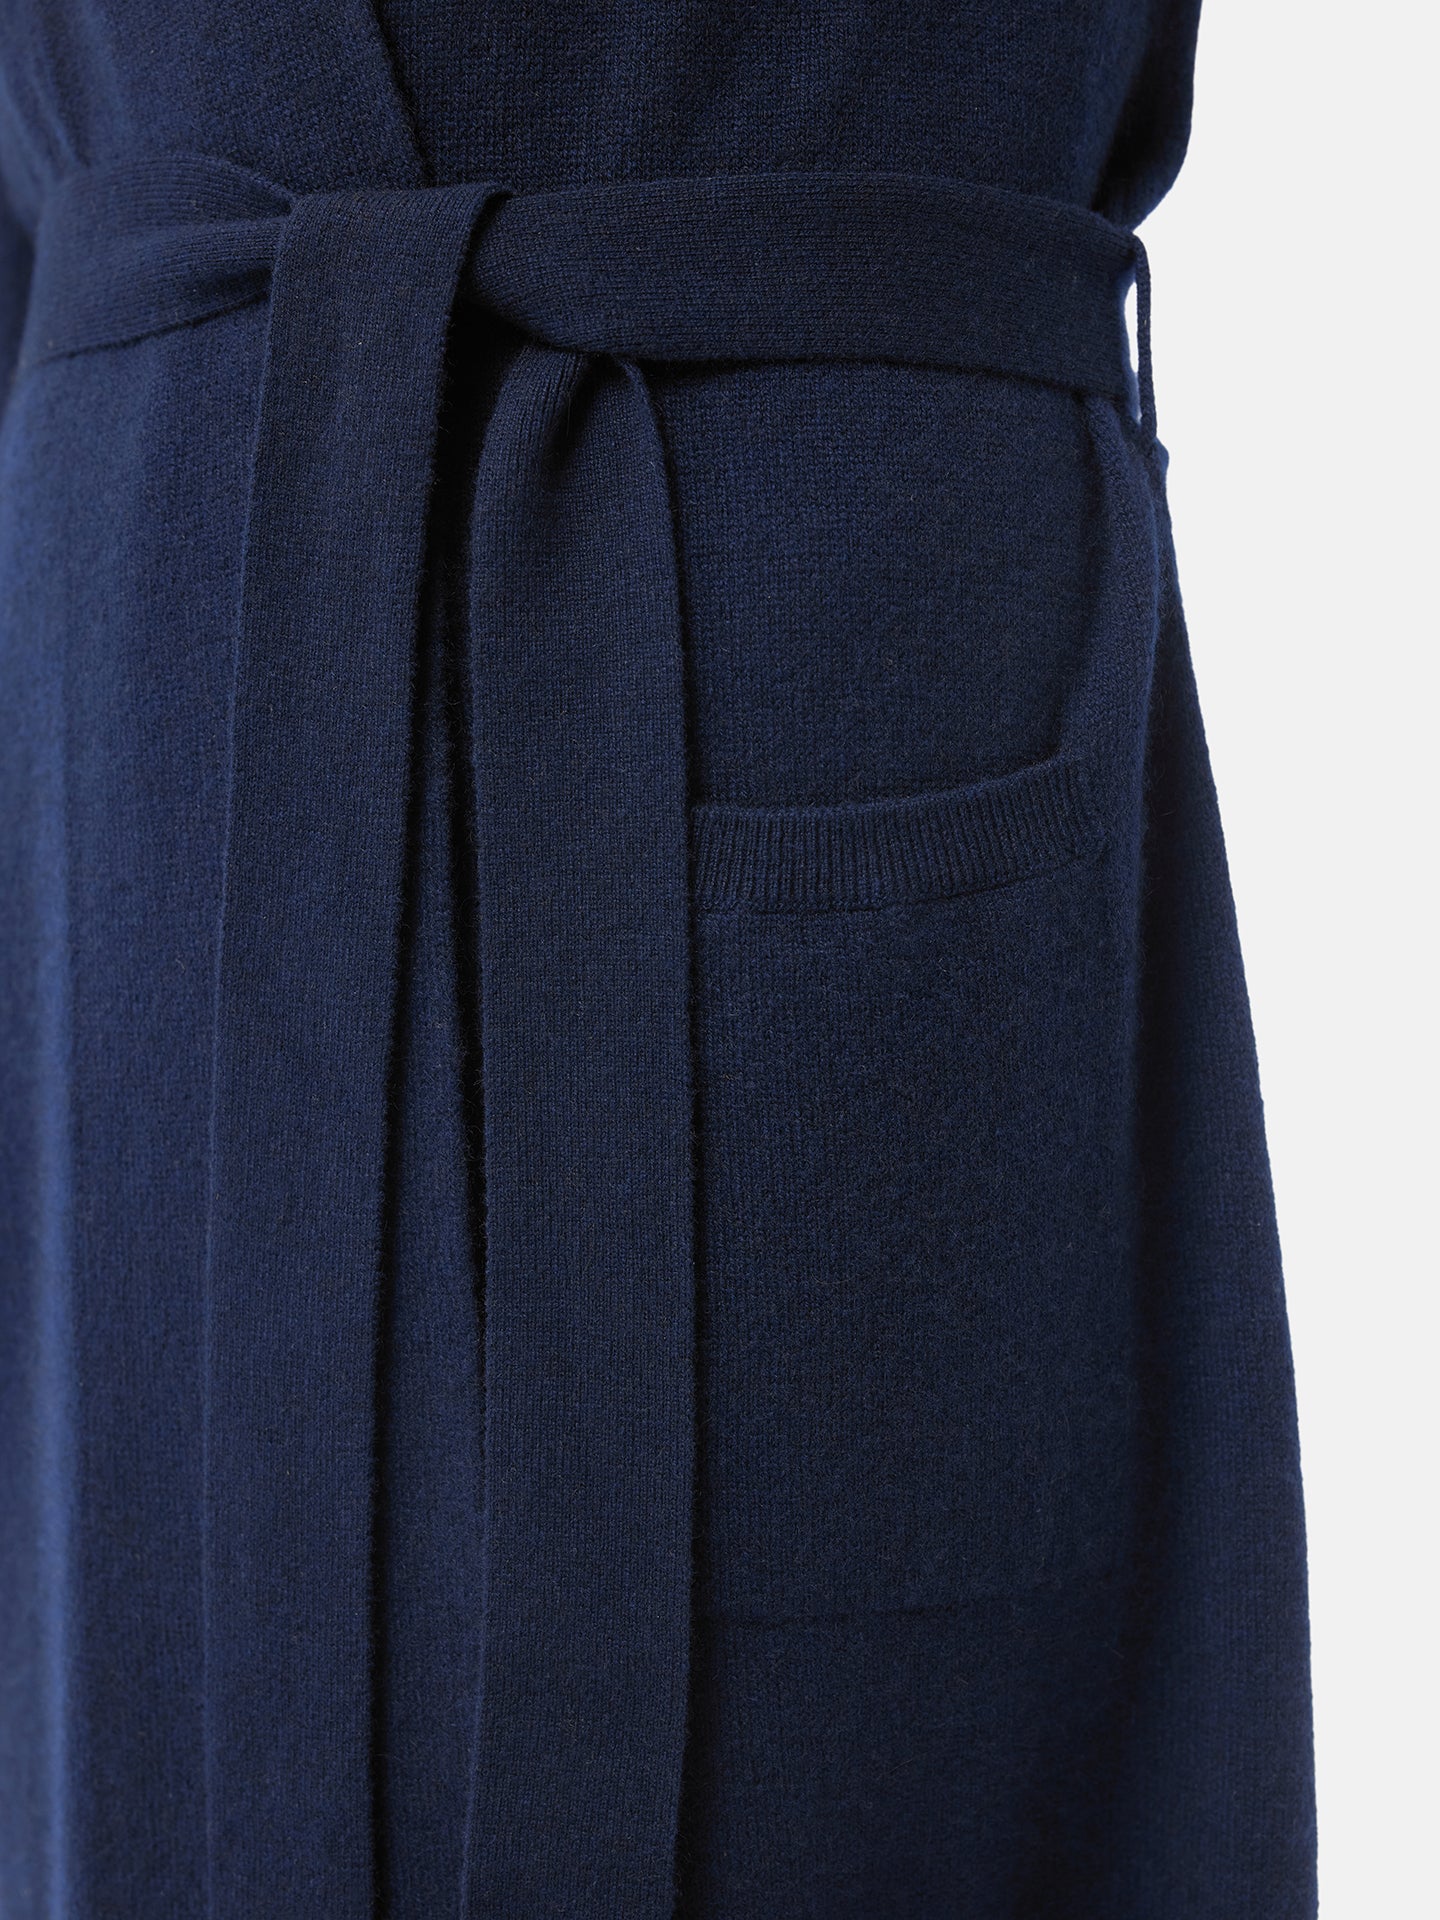 Women's Cashmere Long Robe Navy - Gobi Cashmere